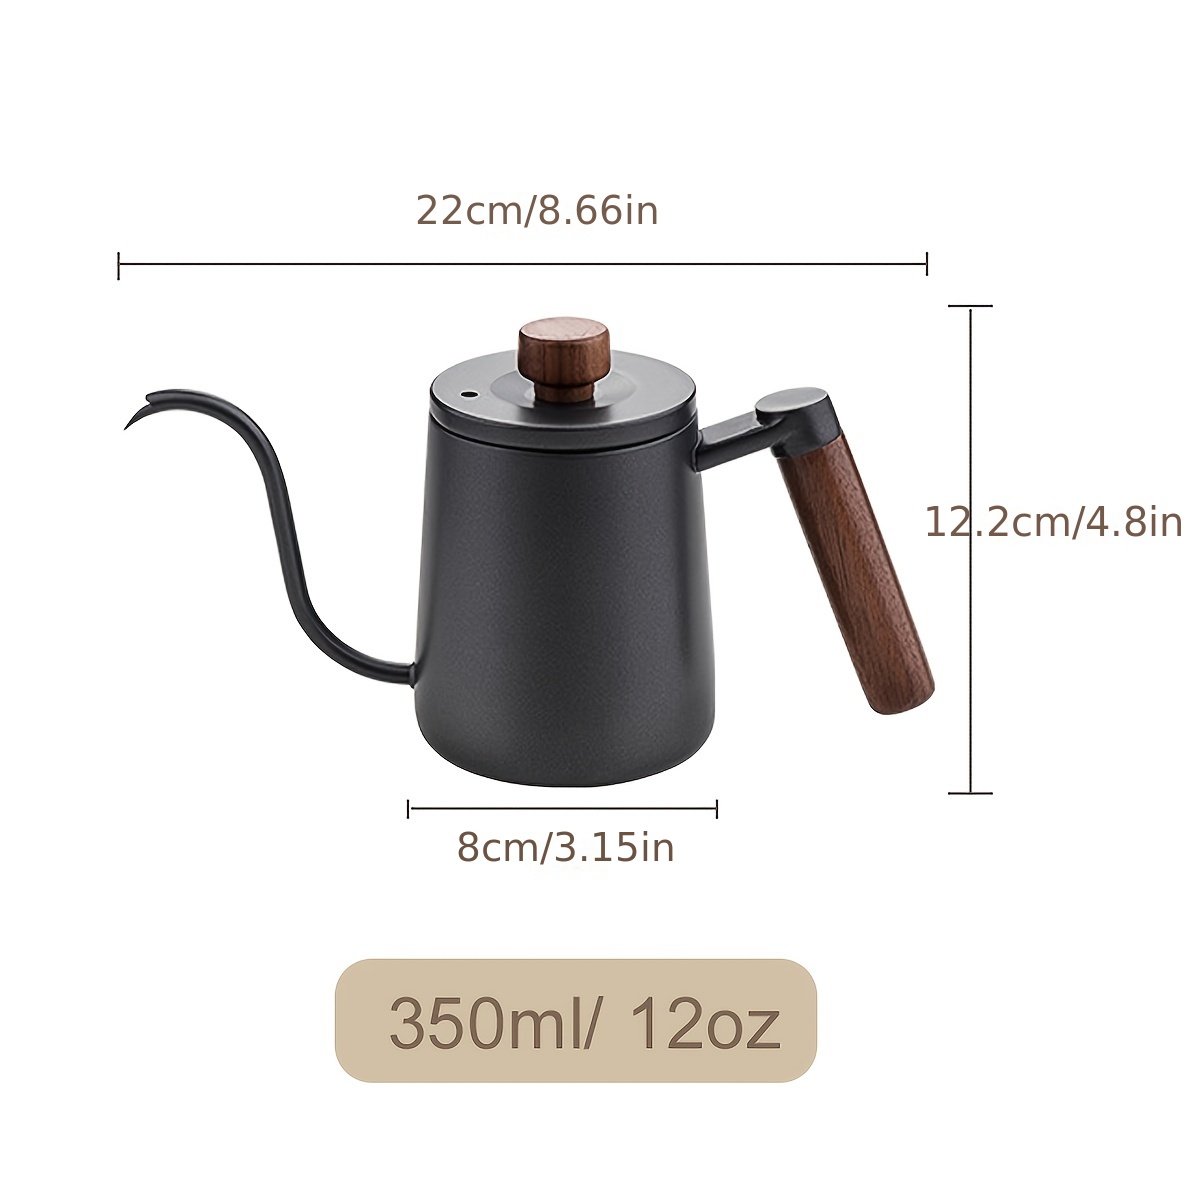 304 Tainless Steel Gooseneck Pour Over Coffee Maker, Mini Coffee